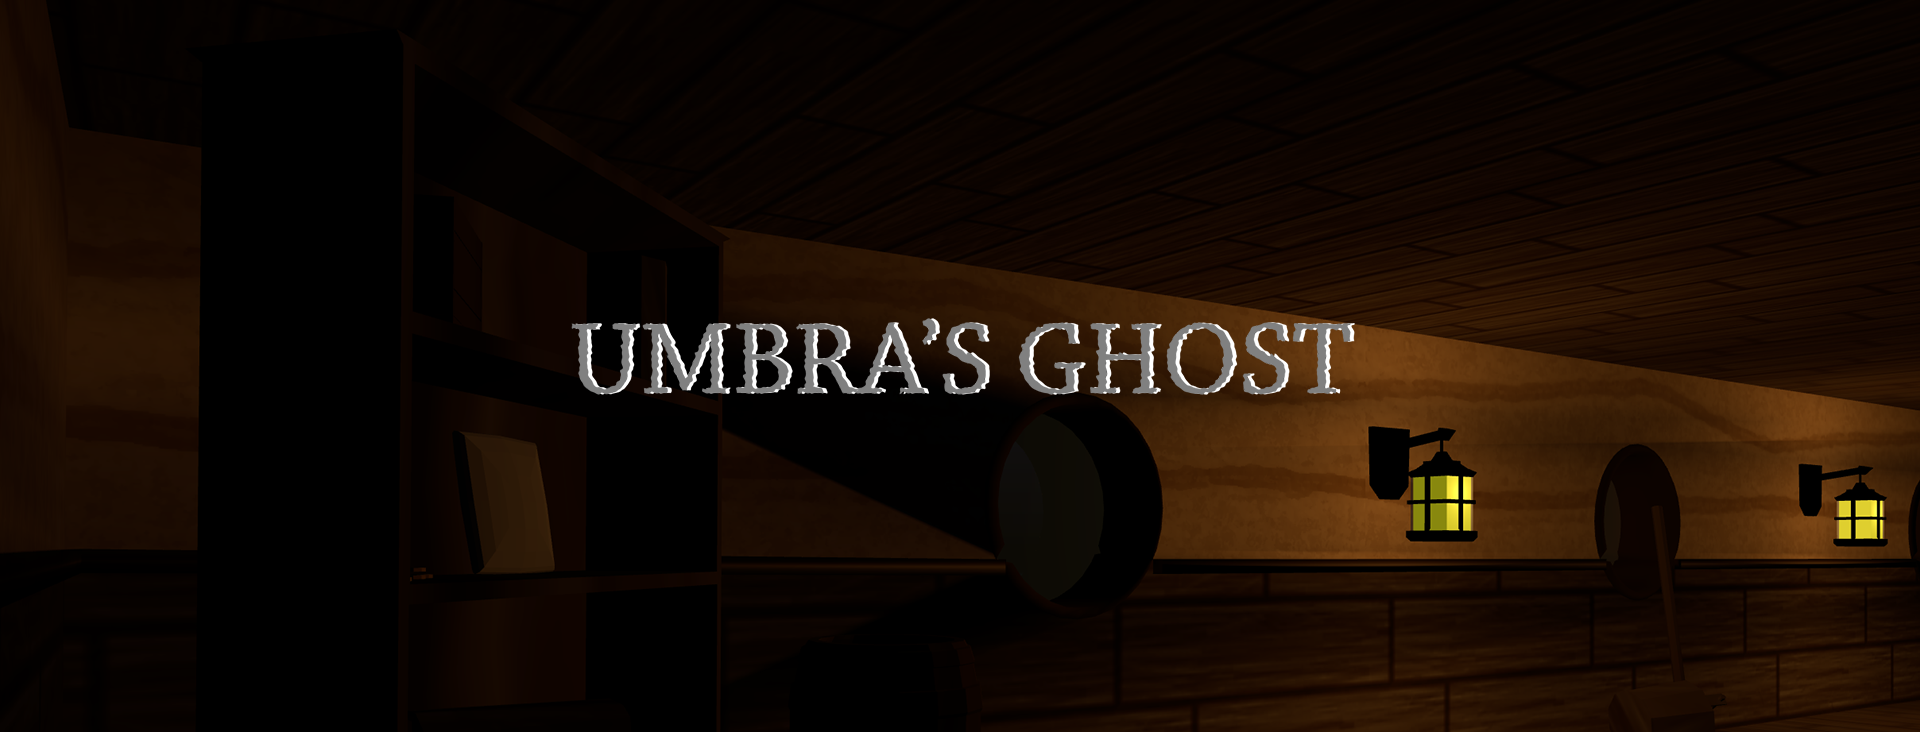 Umbra's Ghost